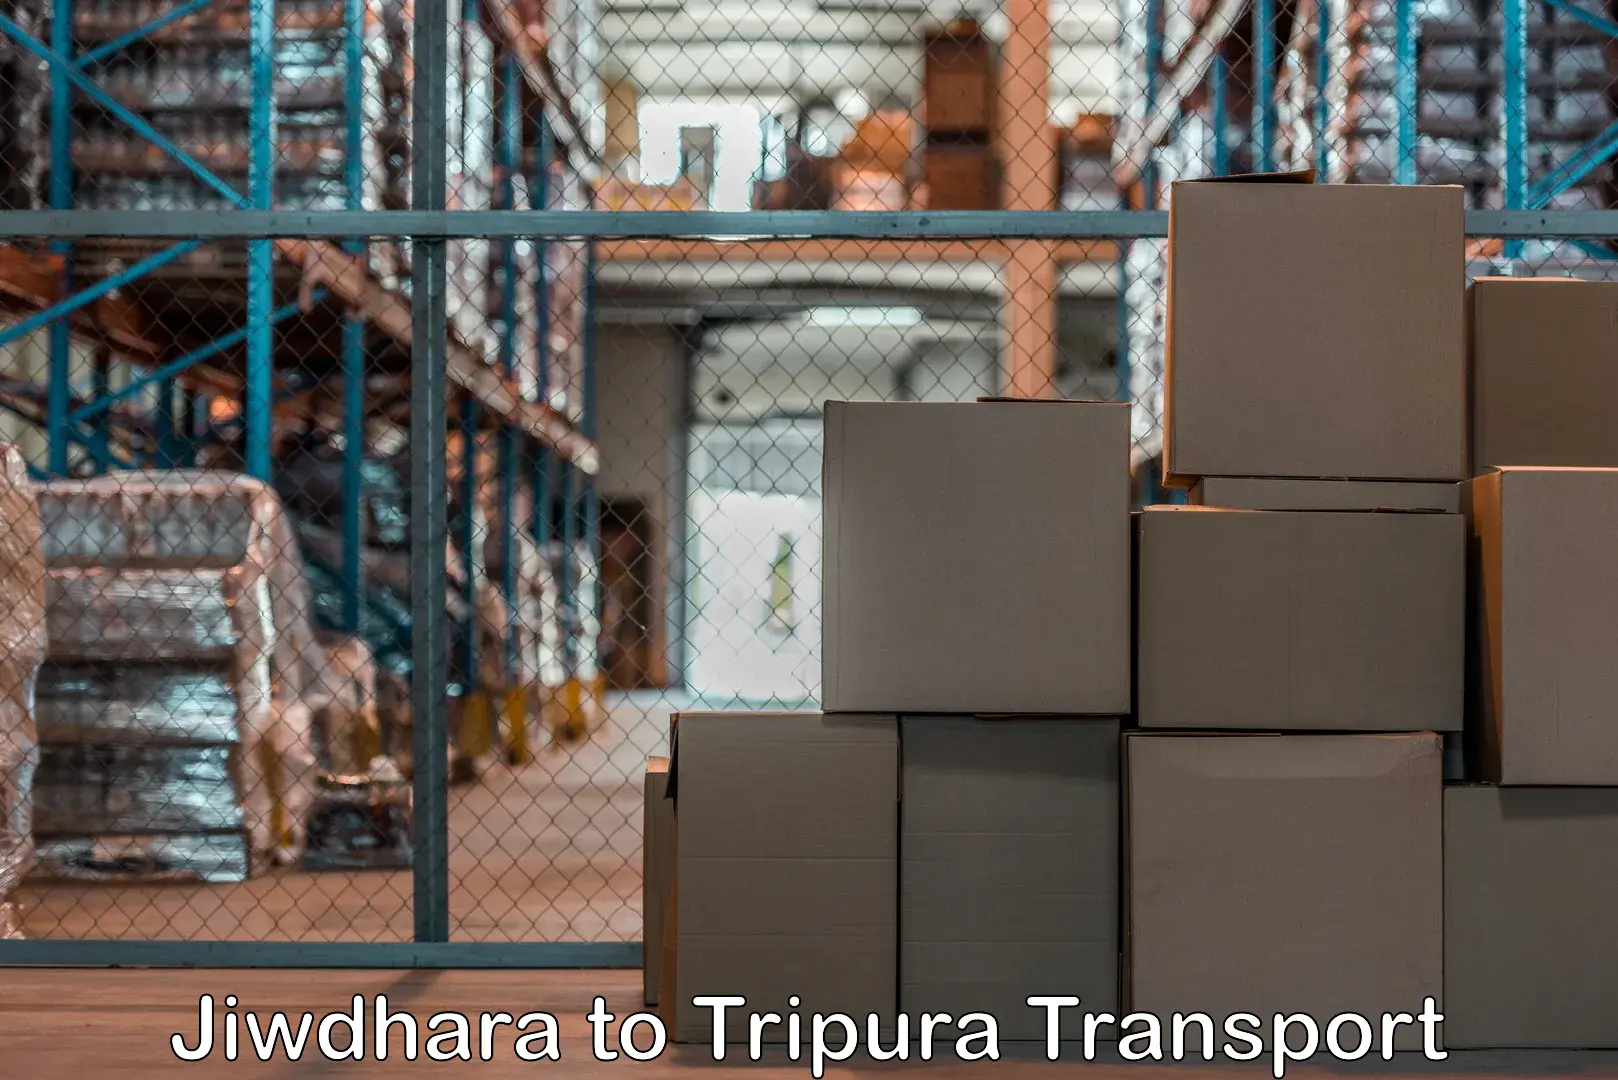 Nationwide transport services in Jiwdhara to Udaipur Tripura